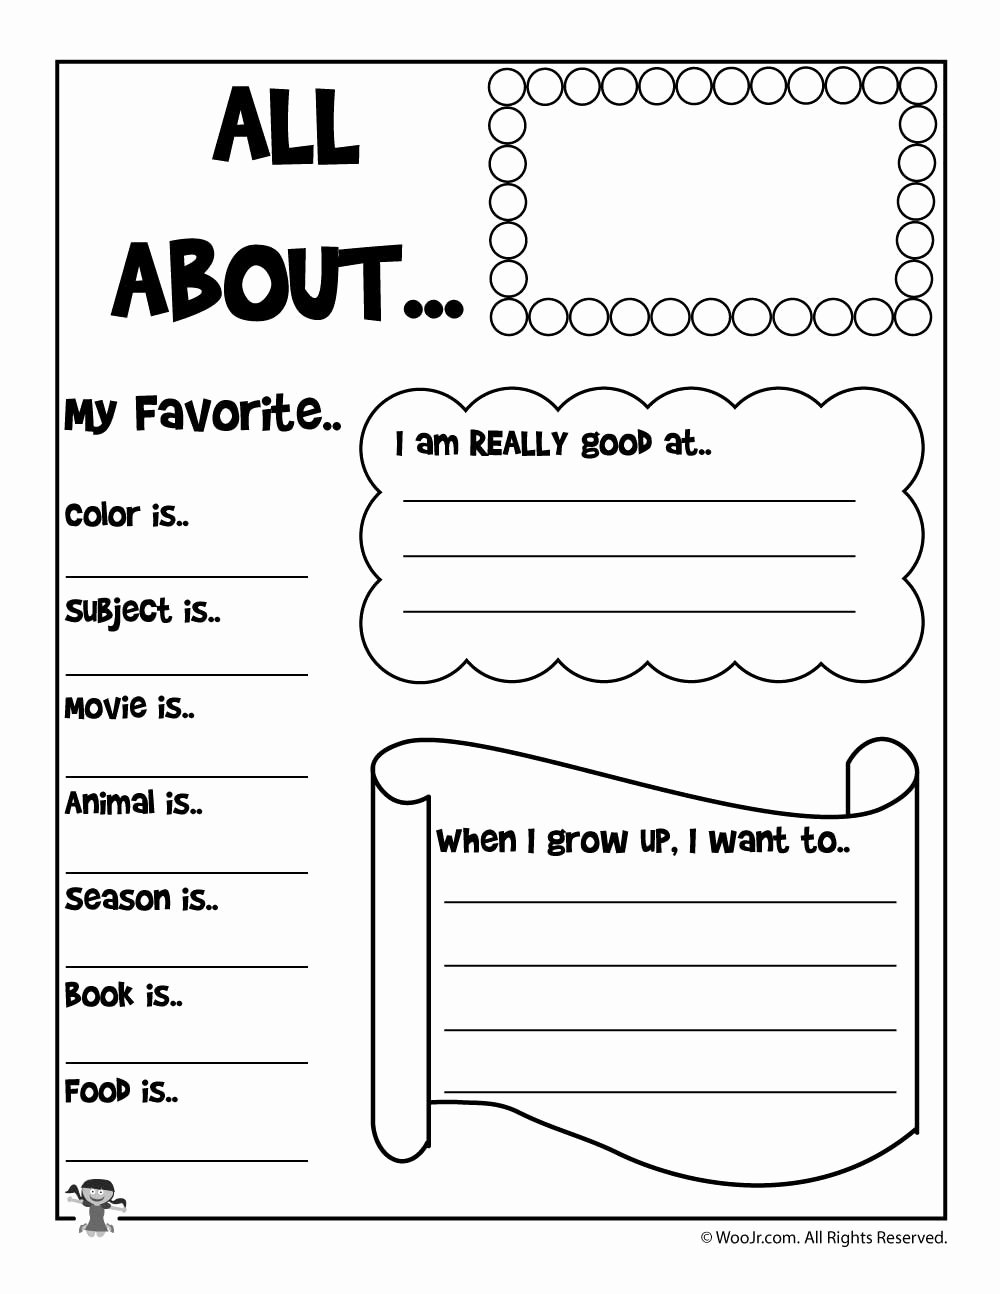 All About Me Worksheet Preschool Elegant All About Me Printable Worksheet